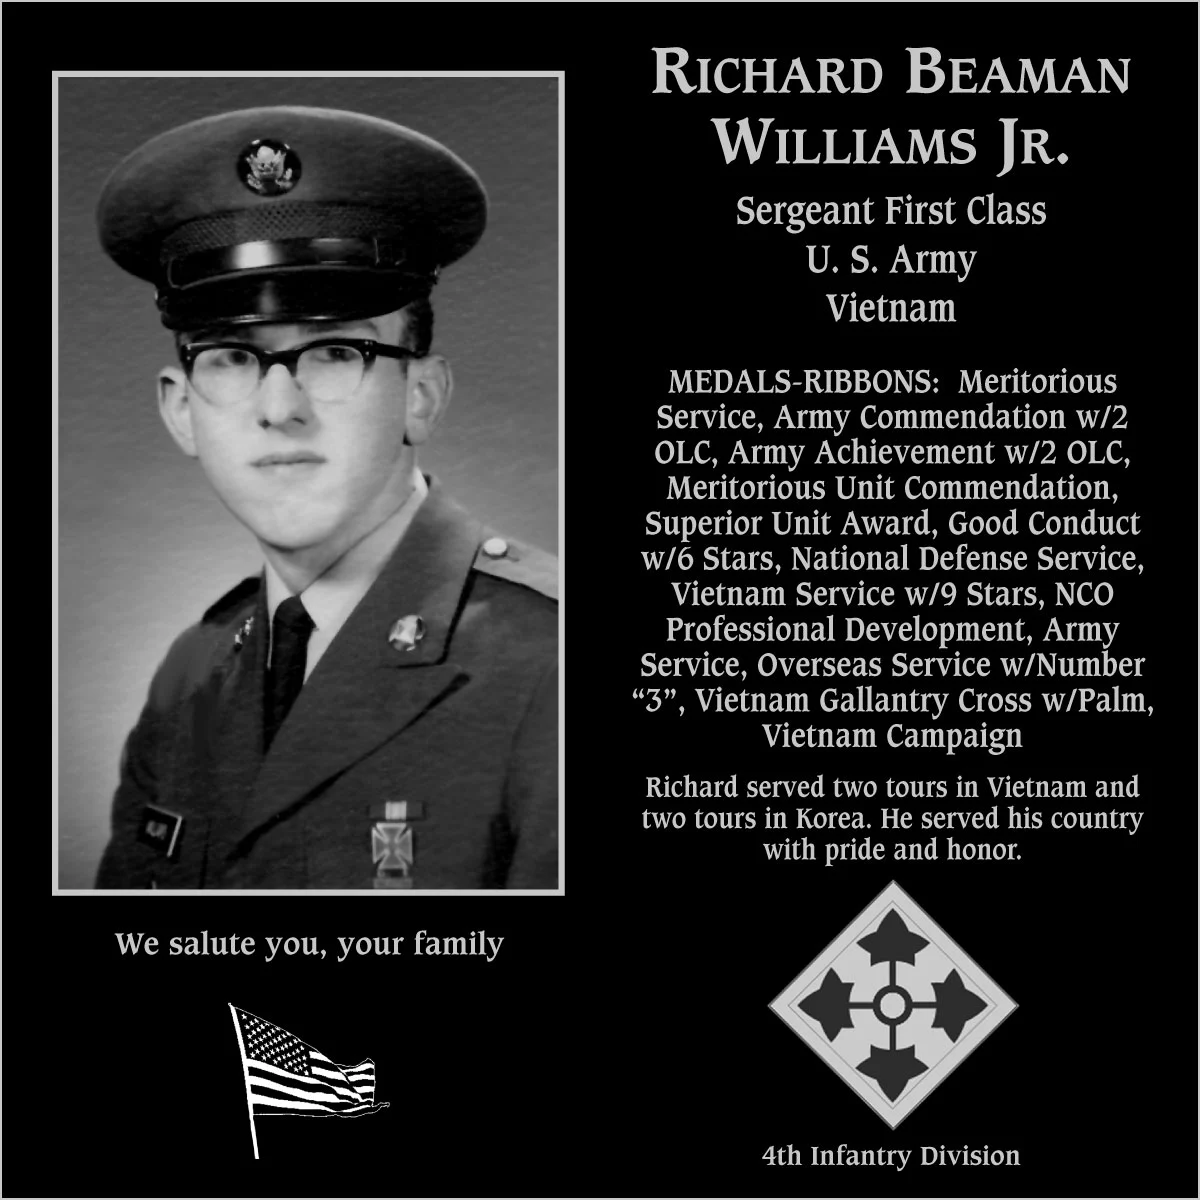 Richard Beaman Williams, jr